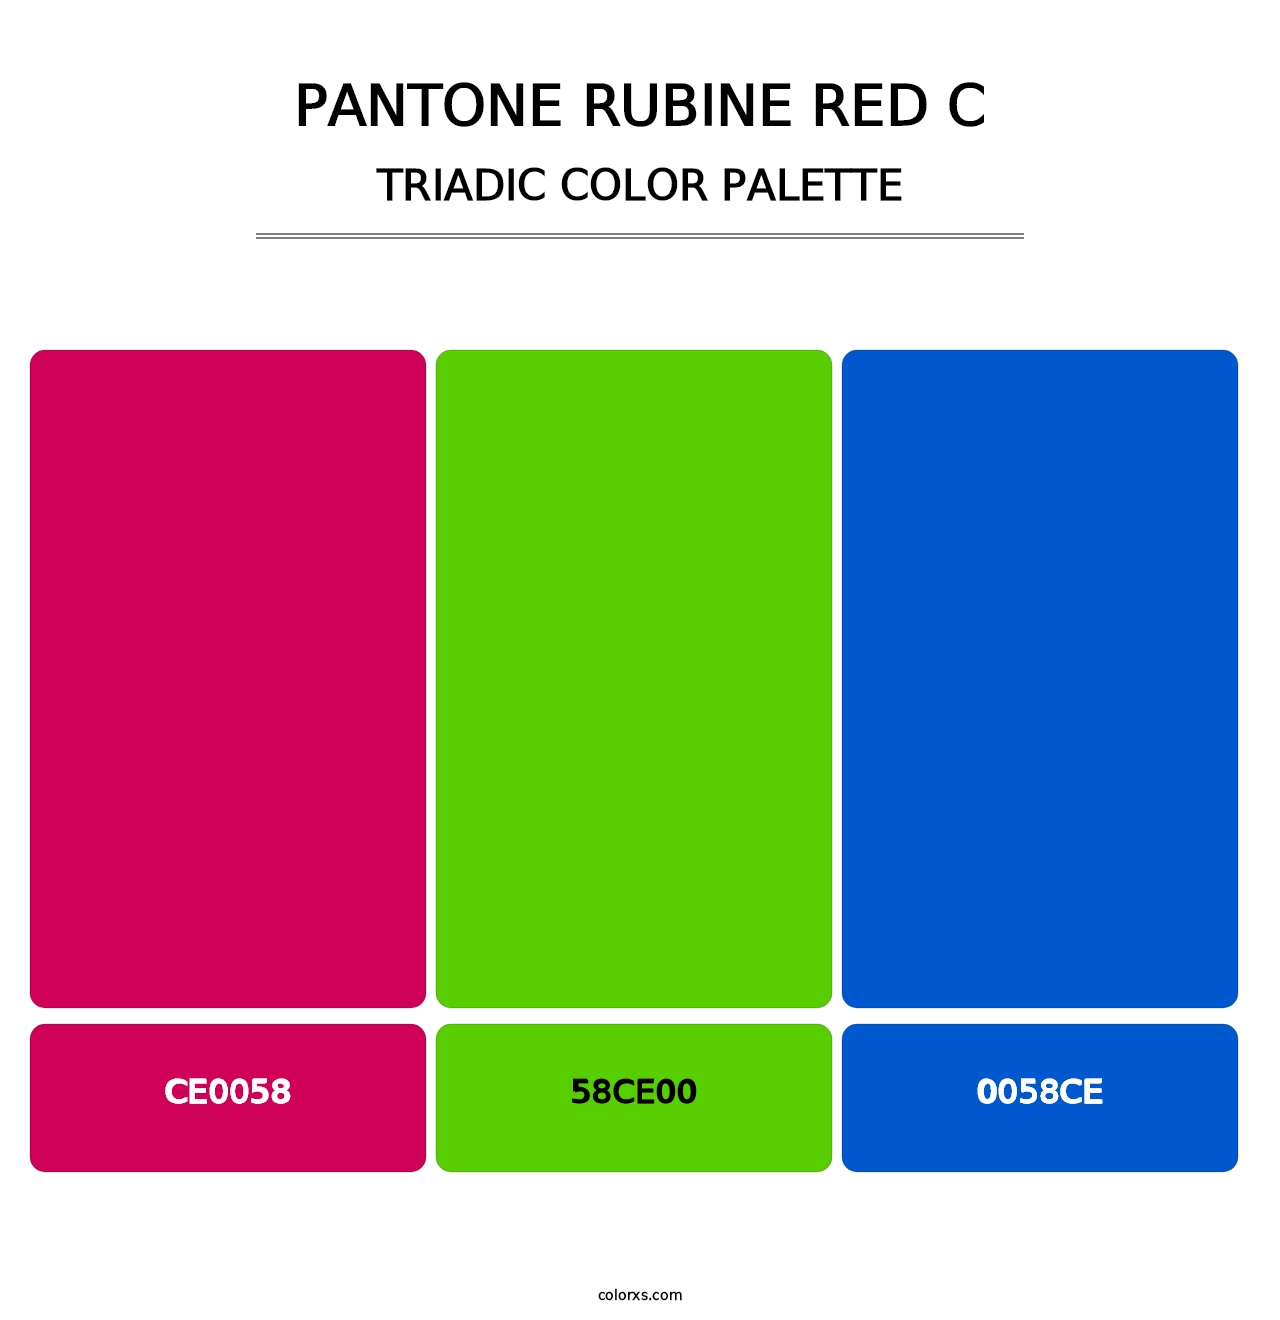 PANTONE Rubine Red C - Triadic Color Palette